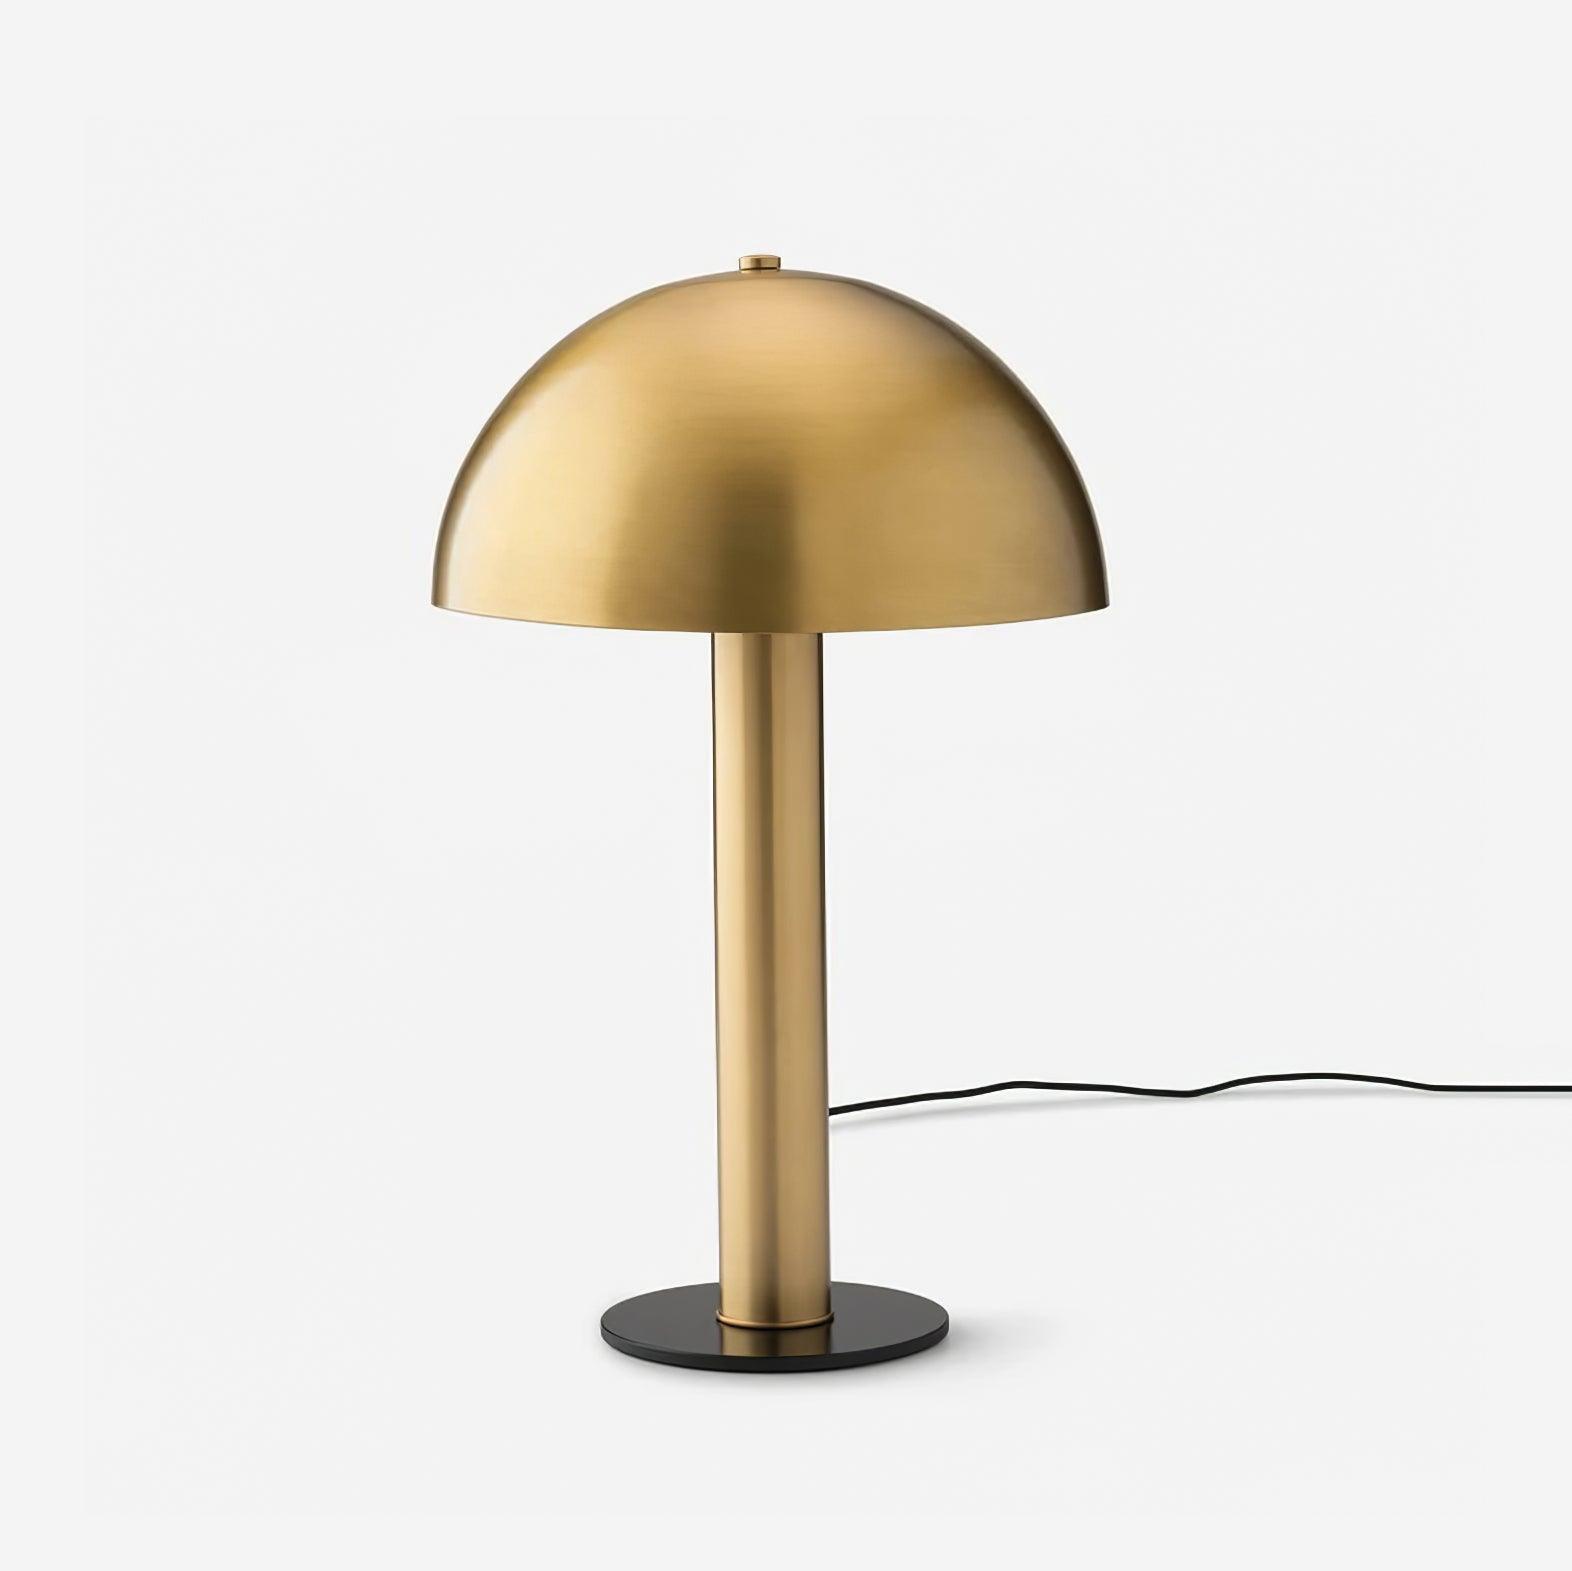 Sidnie Table Lamp 11.8″- 19.6″